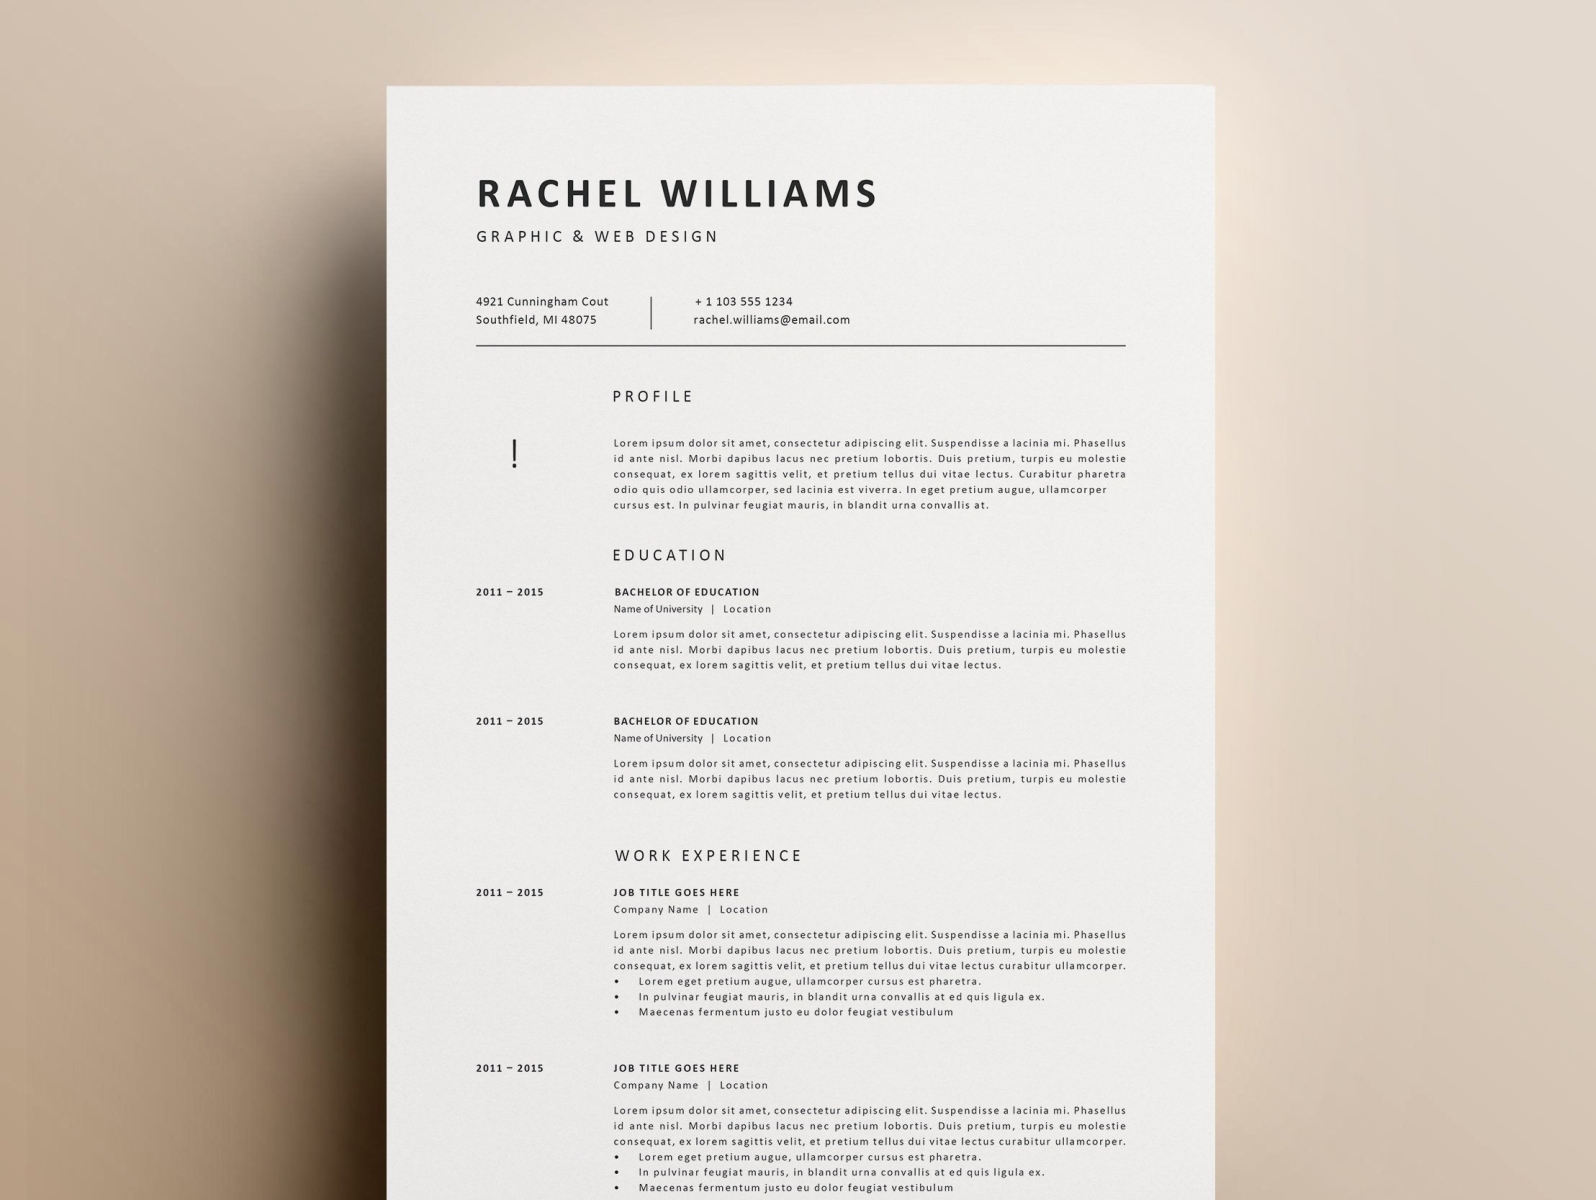 legal document design template minimalist resume cv